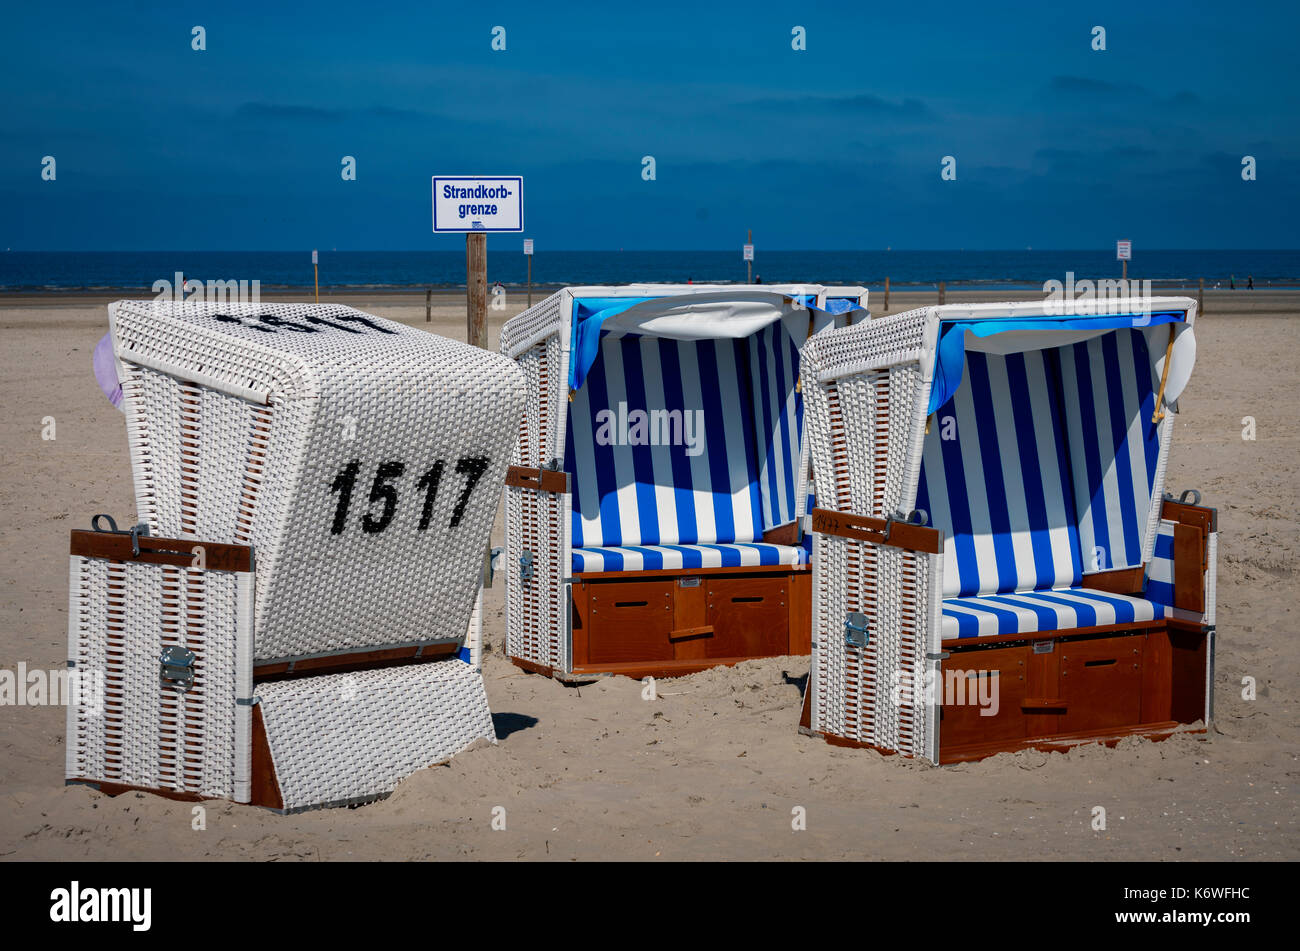 Beach chairs with sign Strandkorbgrenze, beach, Sankt Peter Ording, North Sea, Schleswig Holstein, Germany Stock Photo